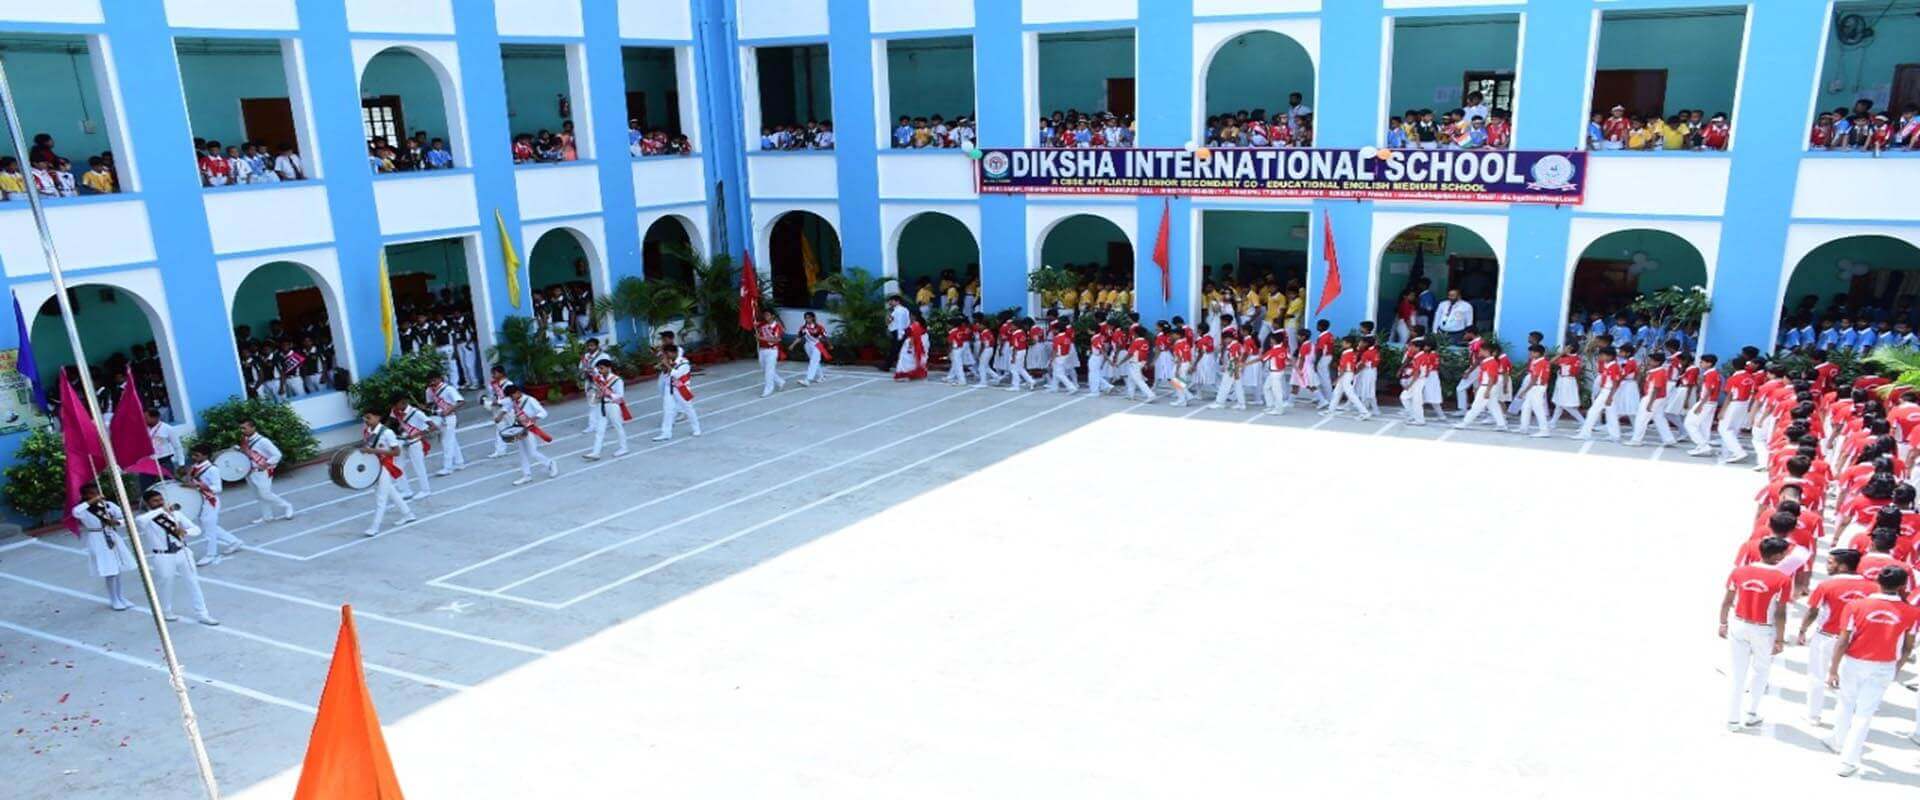 Slider in Diksha International School Bhagalpur